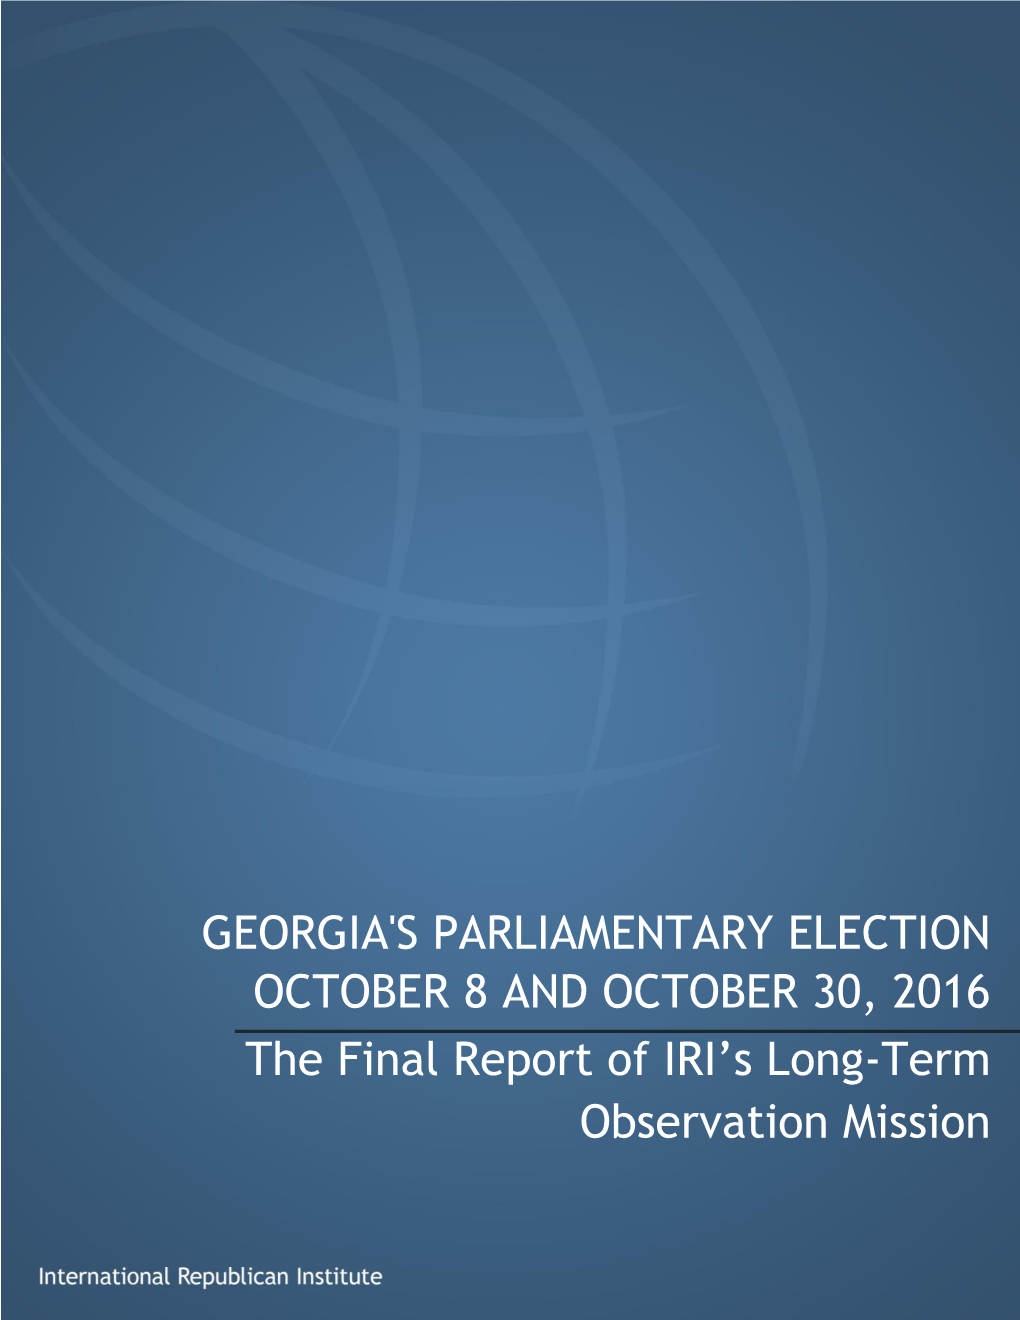 Georgia's Parliamentary Election: the Final Report of IRI's Long-Term